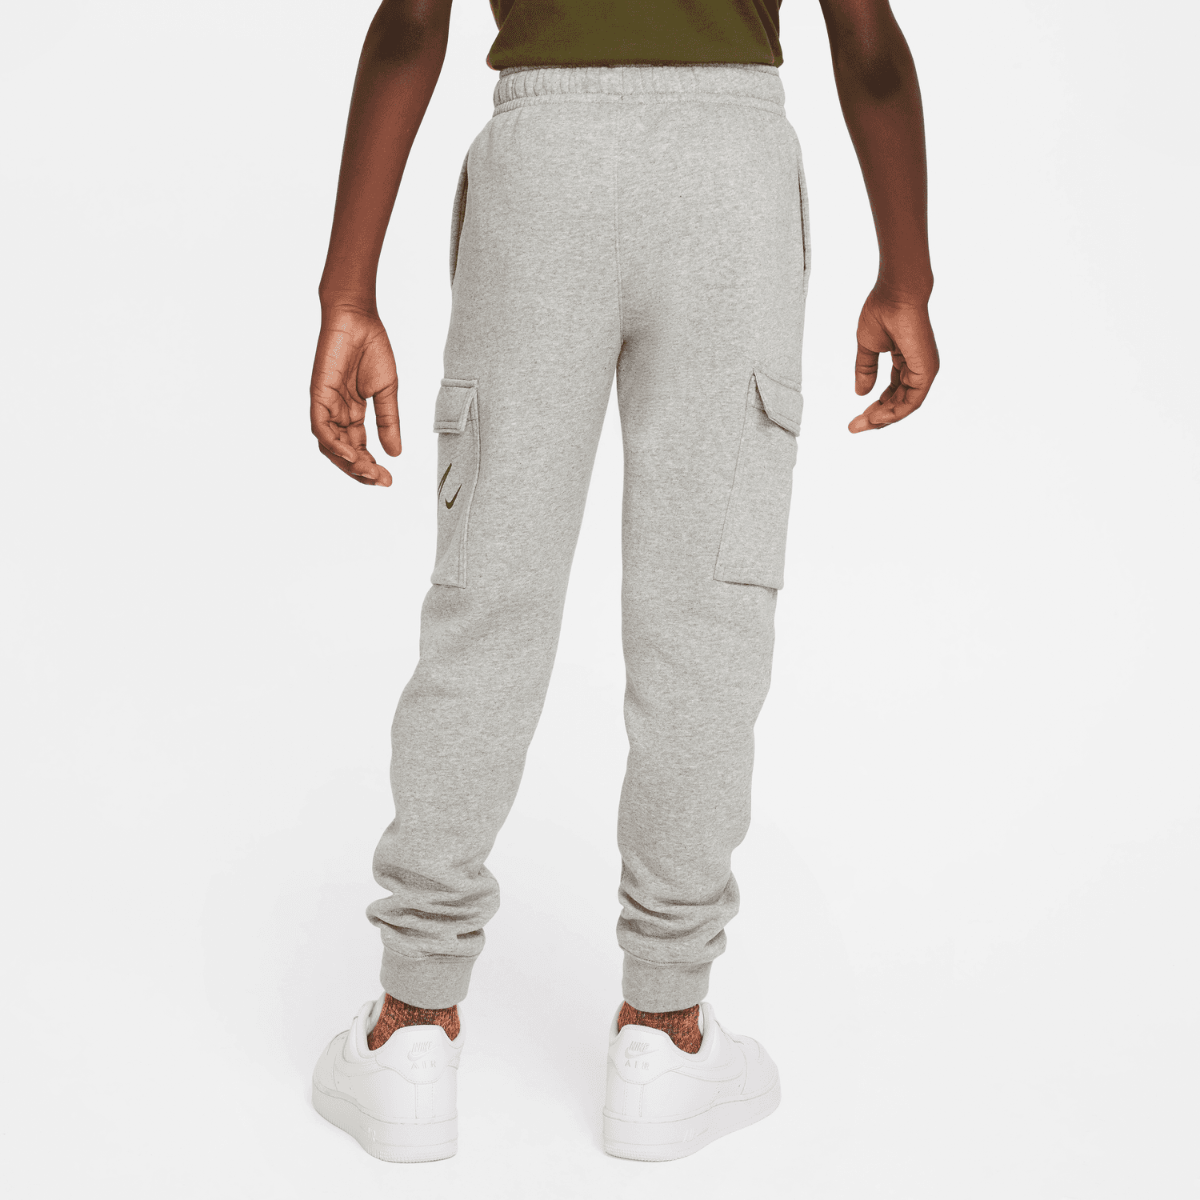 Pantaloni Nike Sportswear Junior Cargo - Grigio/Bianco/Nero